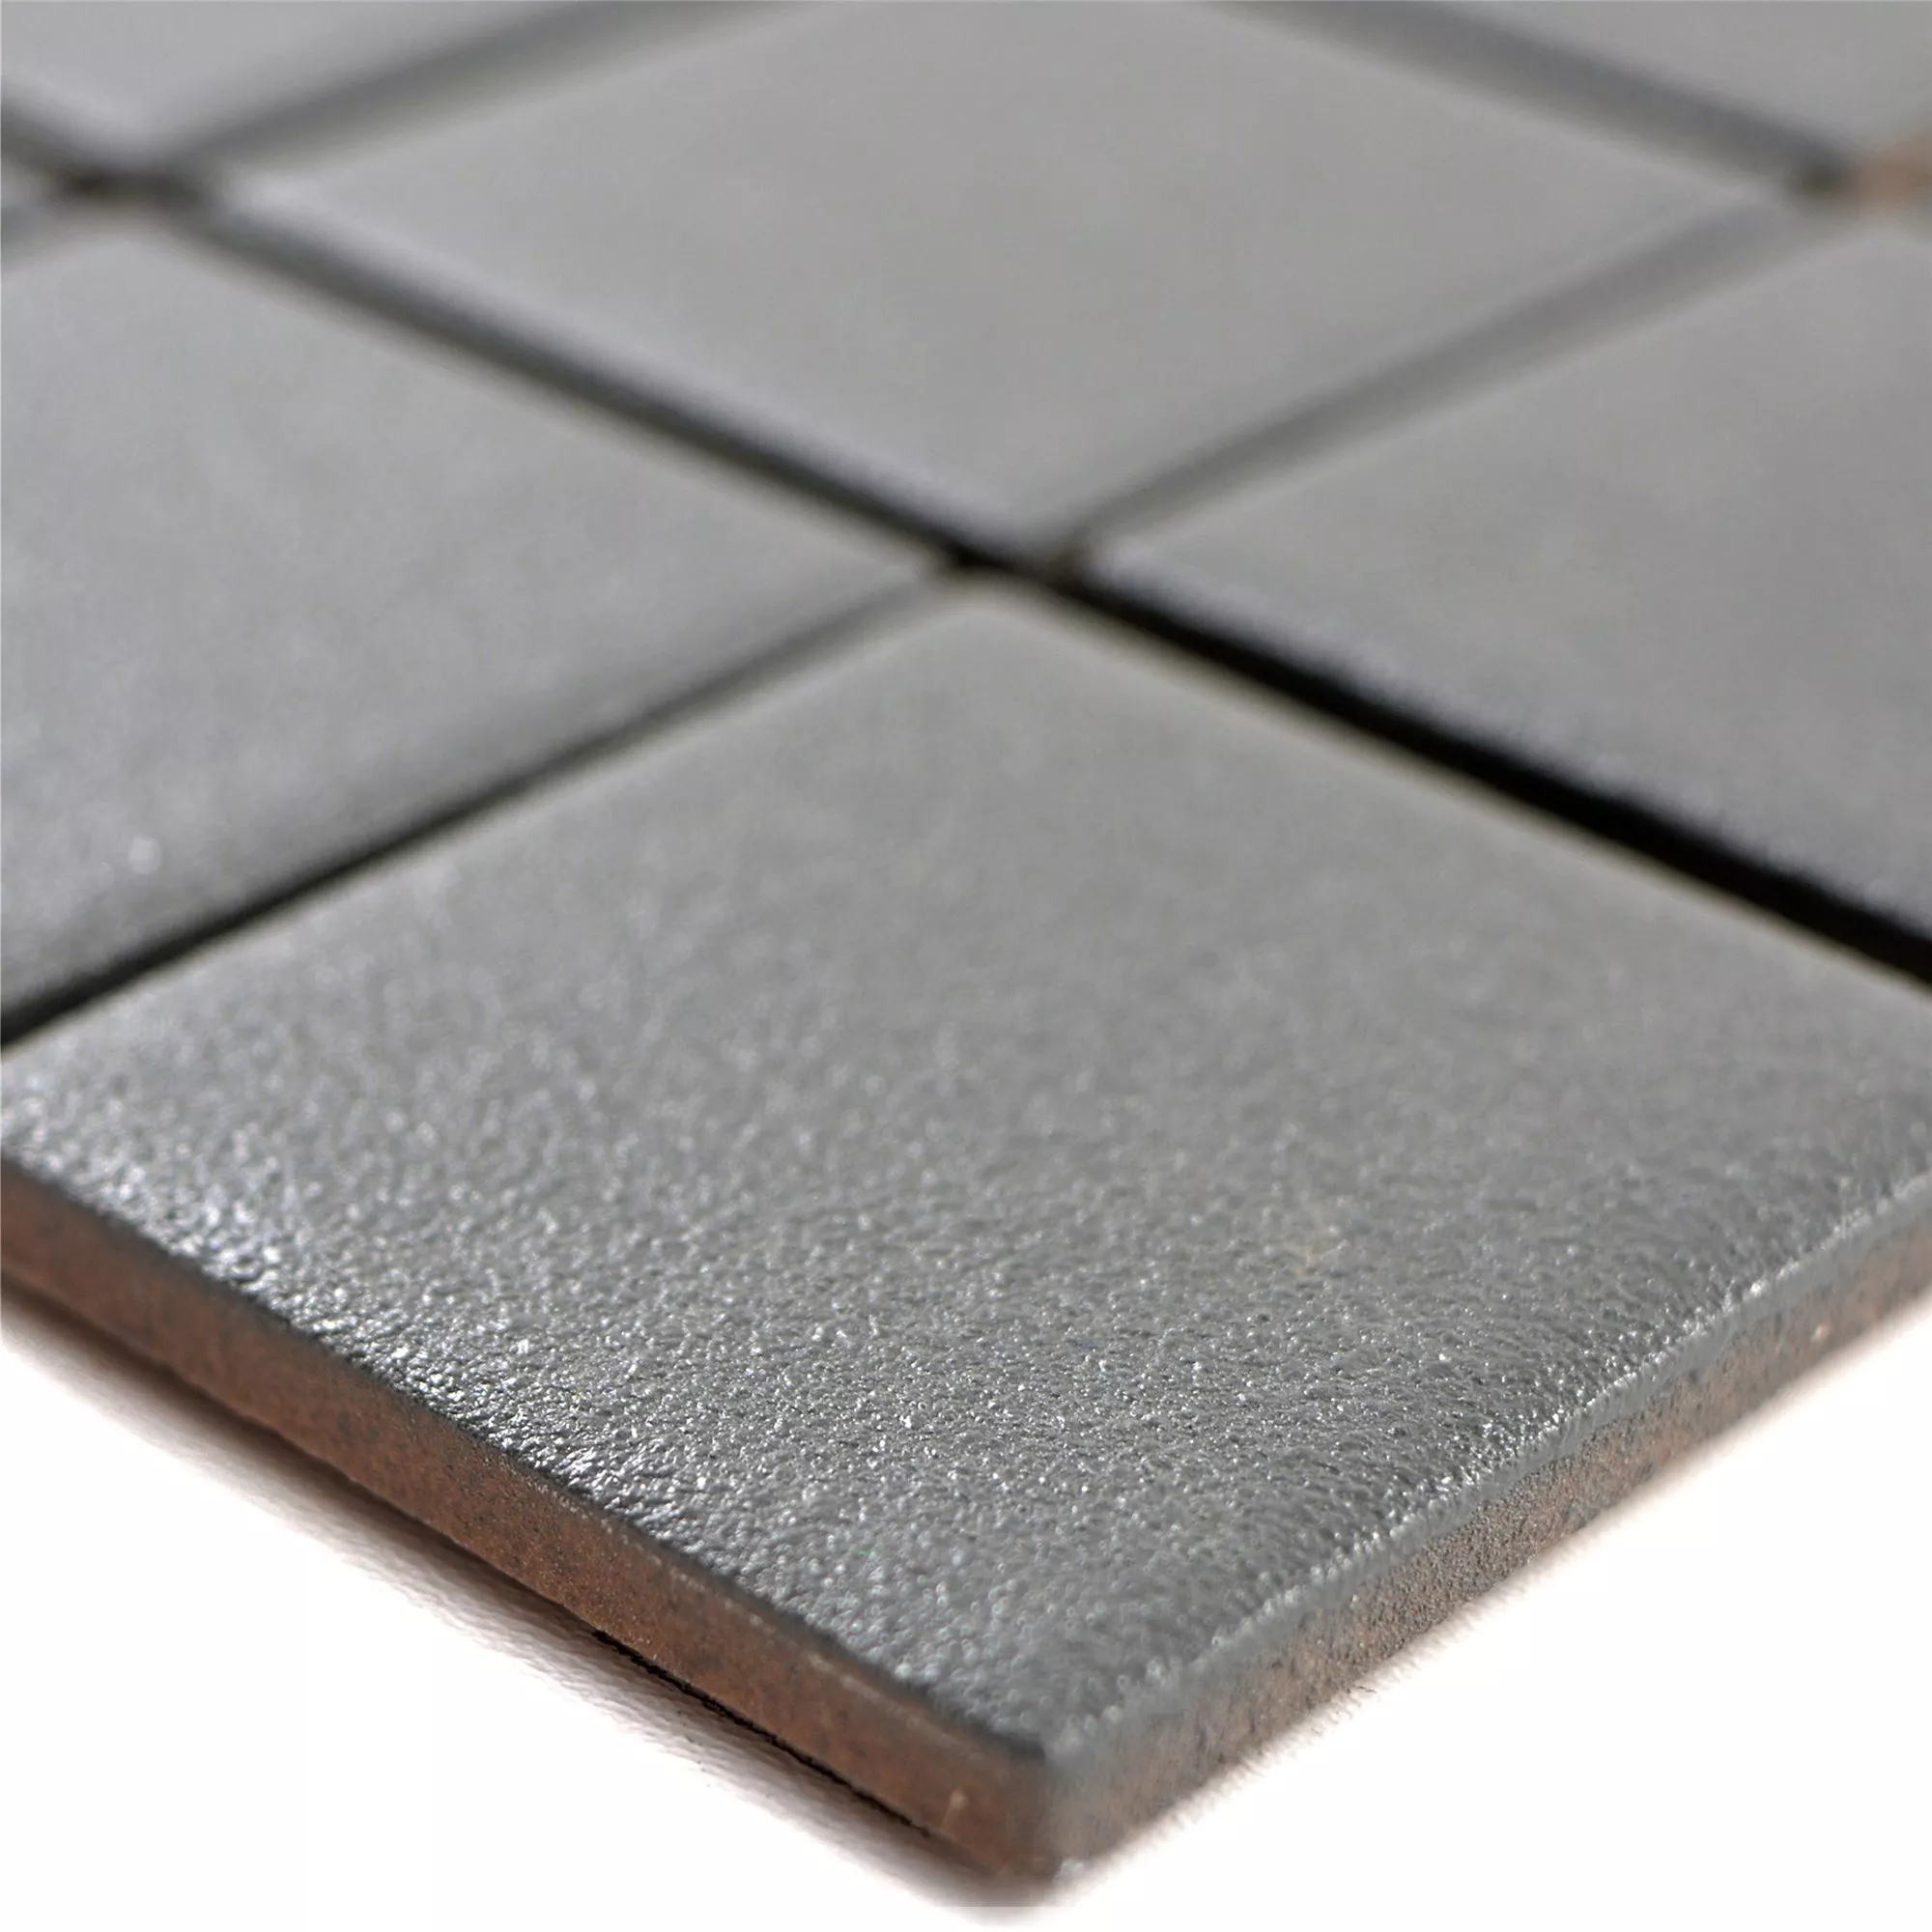 Sample Ceramic Mosaic Tiles Shalin Non-Slip R10 Grey Q48